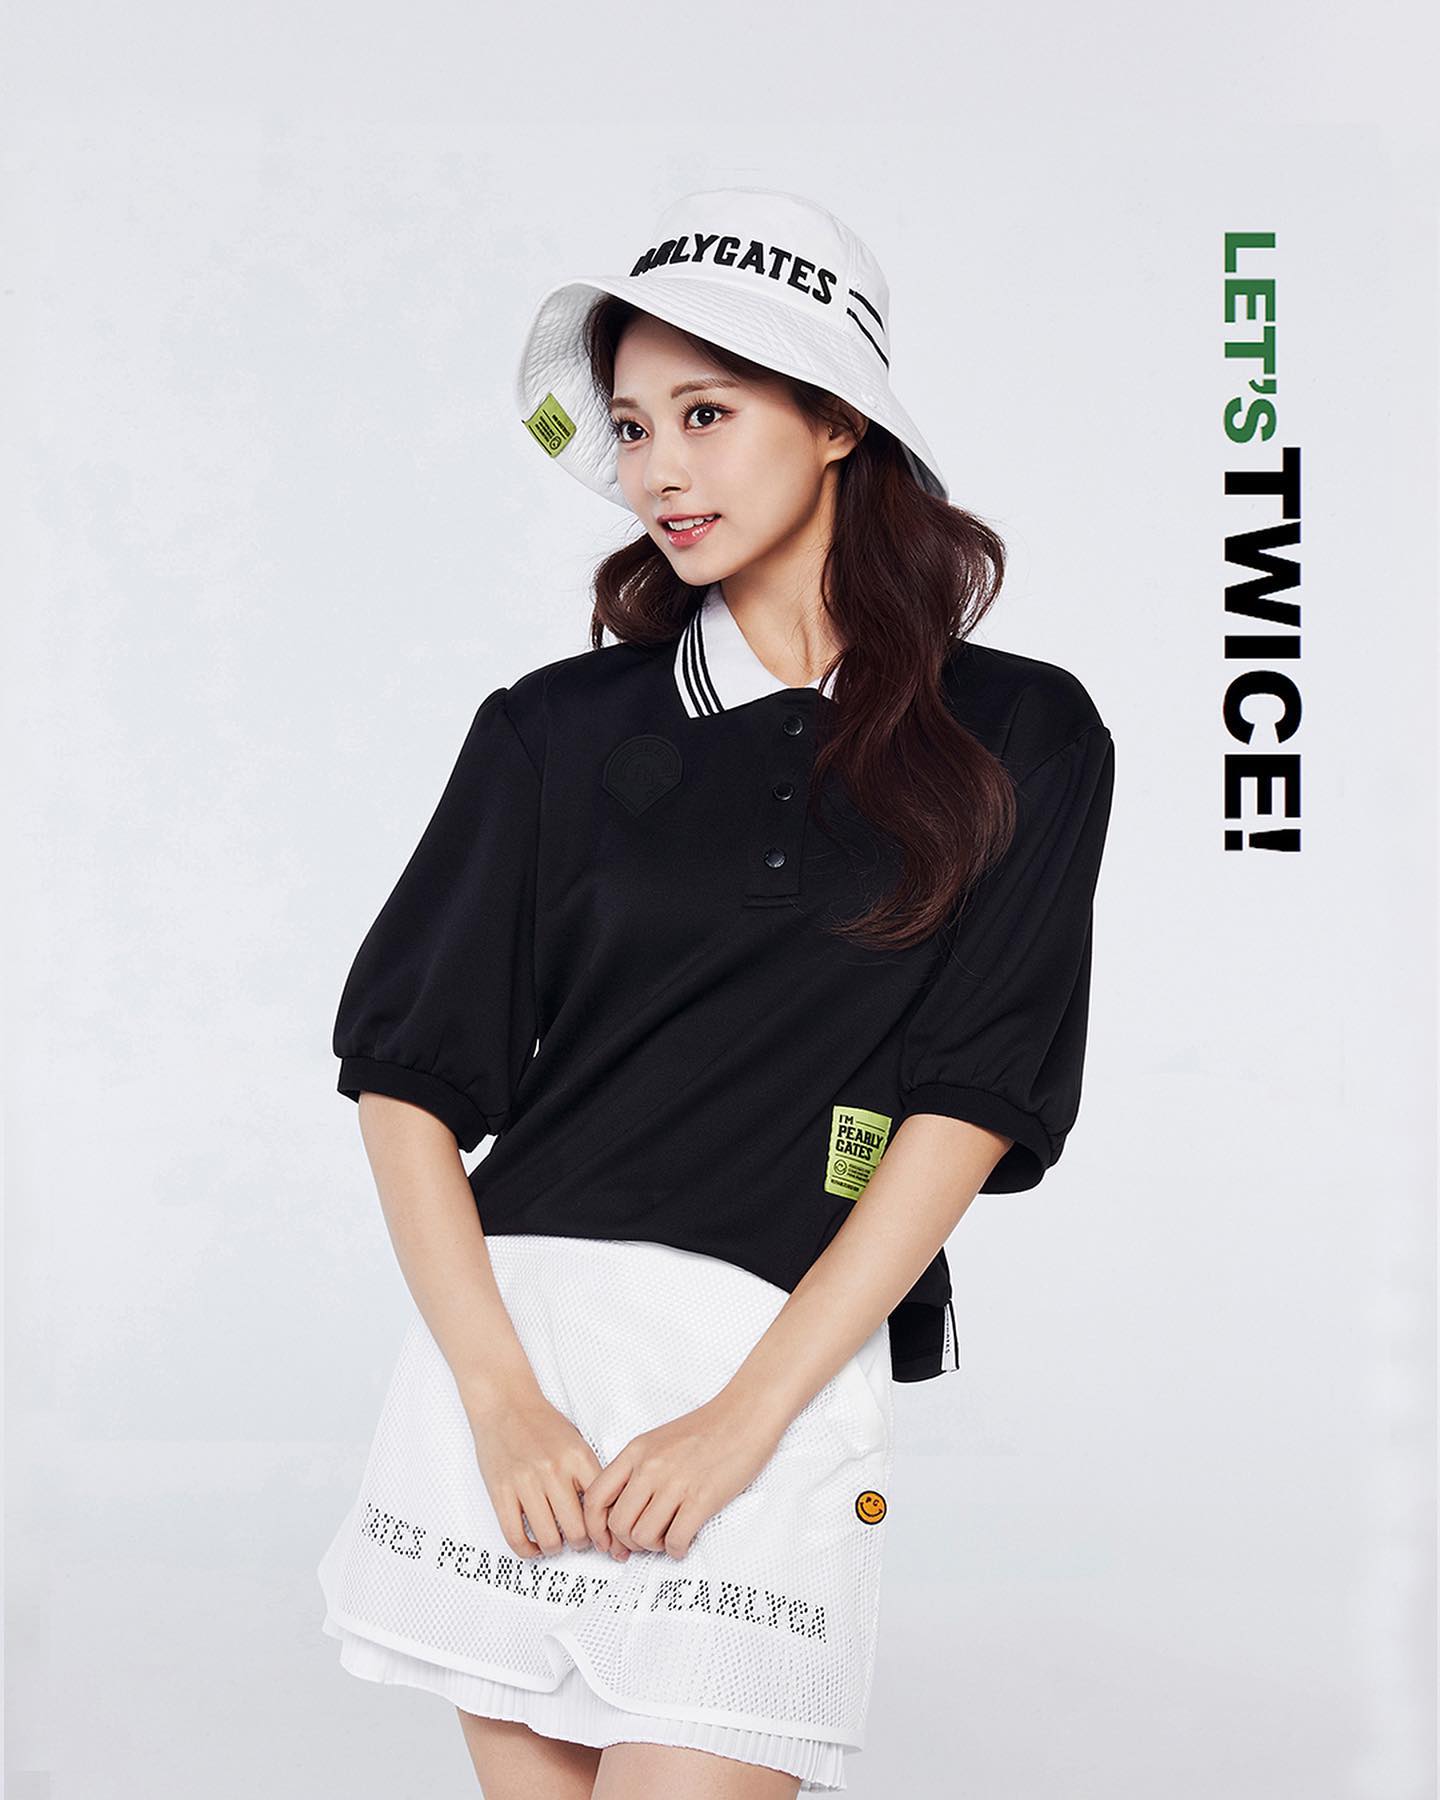 pearly-gate-lady-Golf-Wearing-Black-White-Skirt-TZUYU-2.jpg